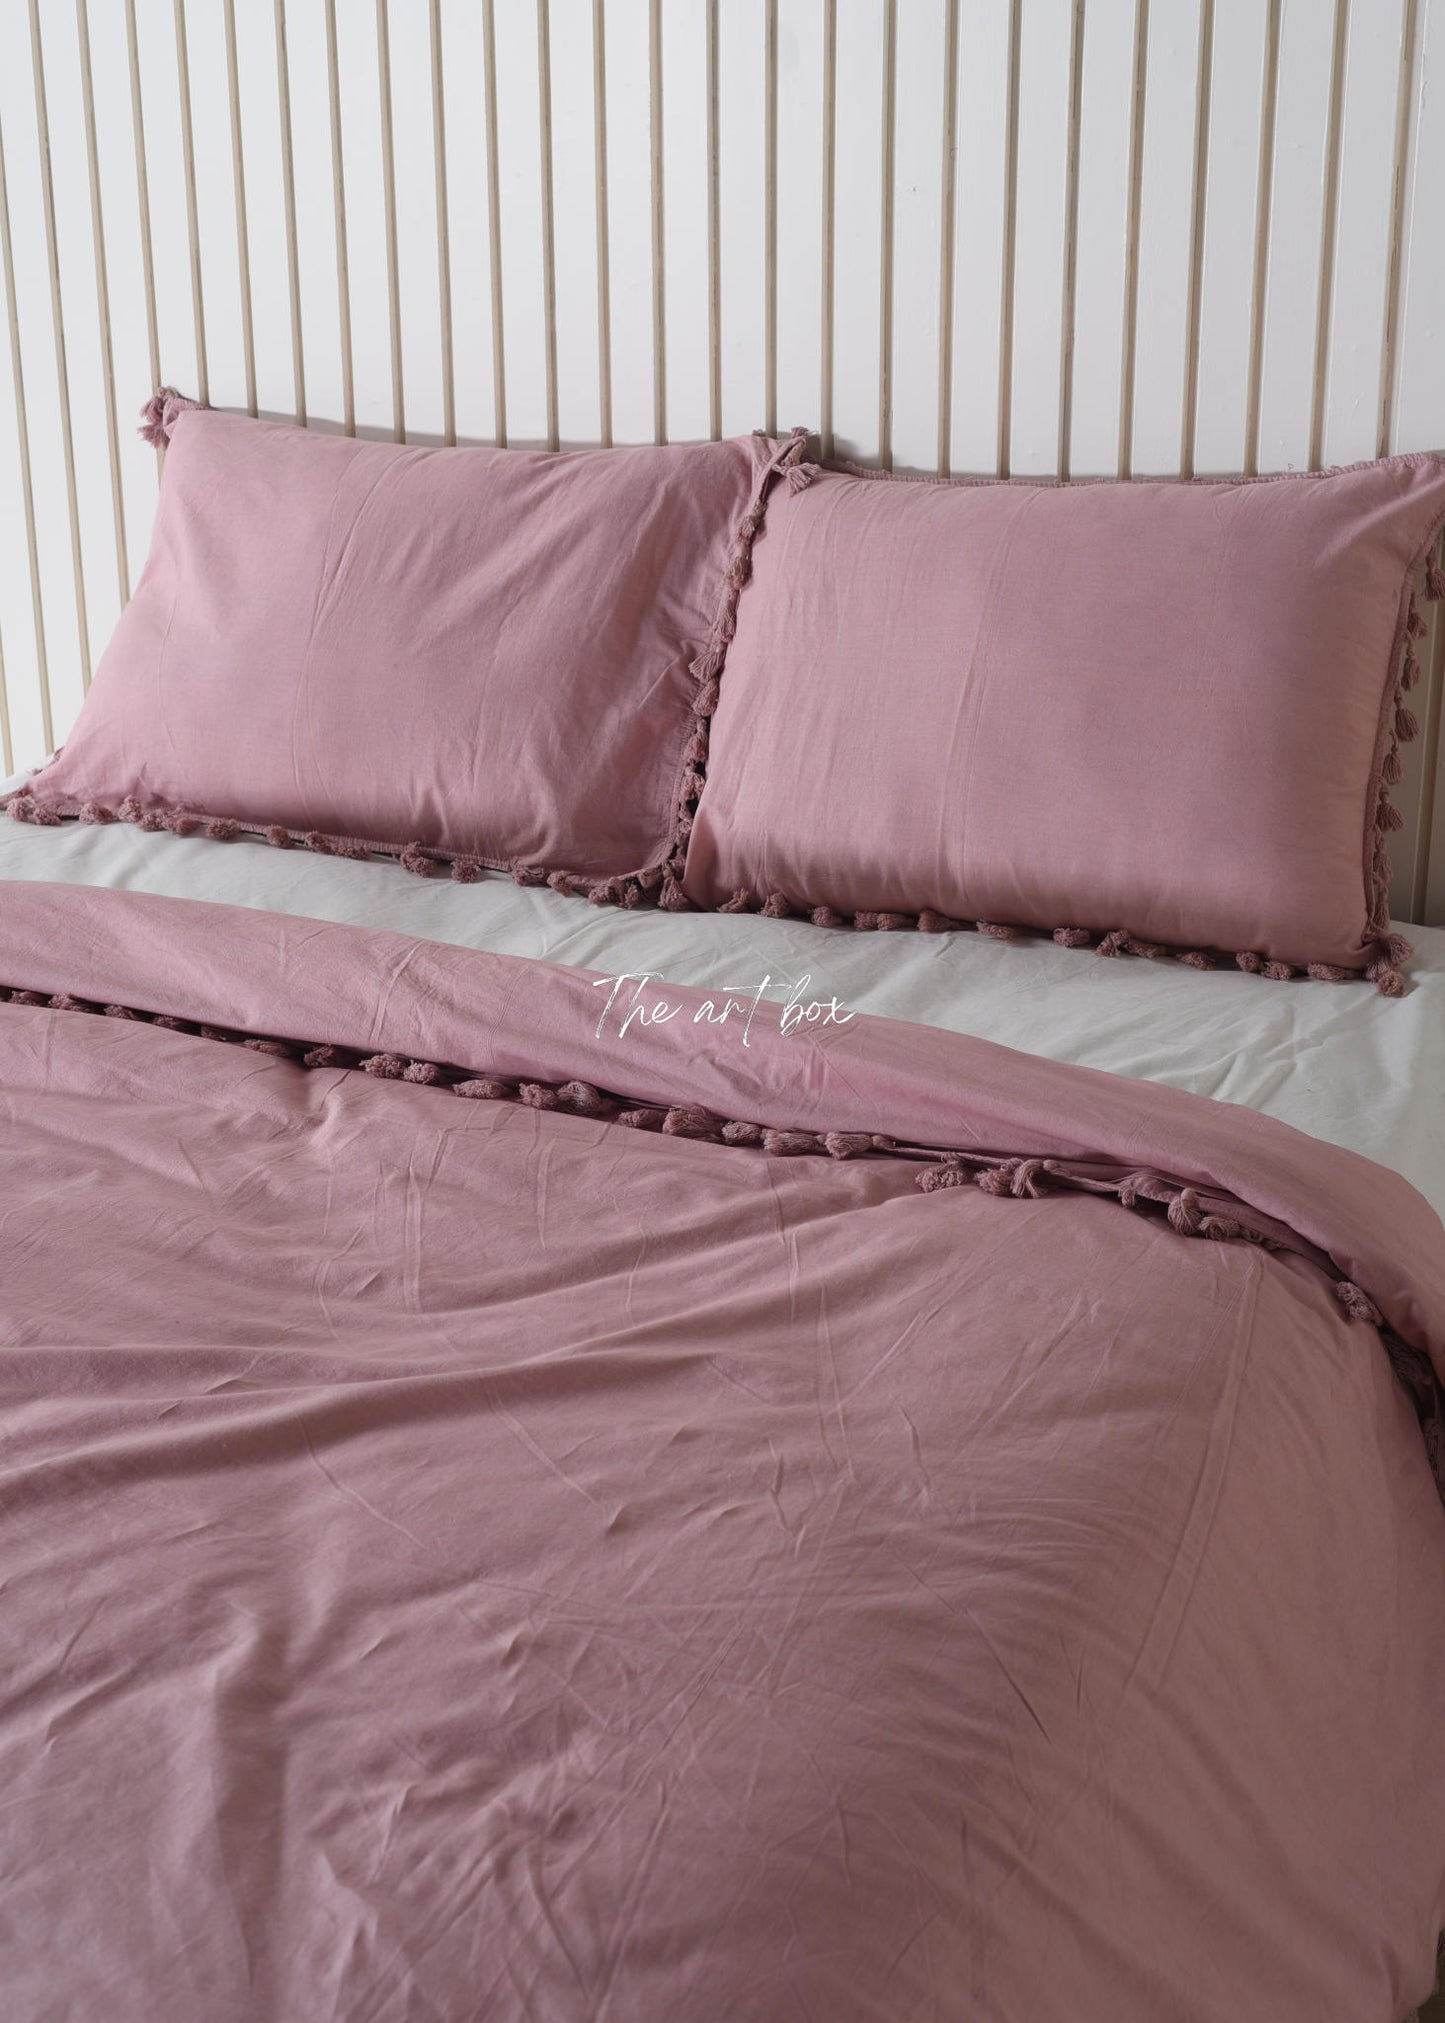 Coral Linen Duvet Cover and Pillow Set